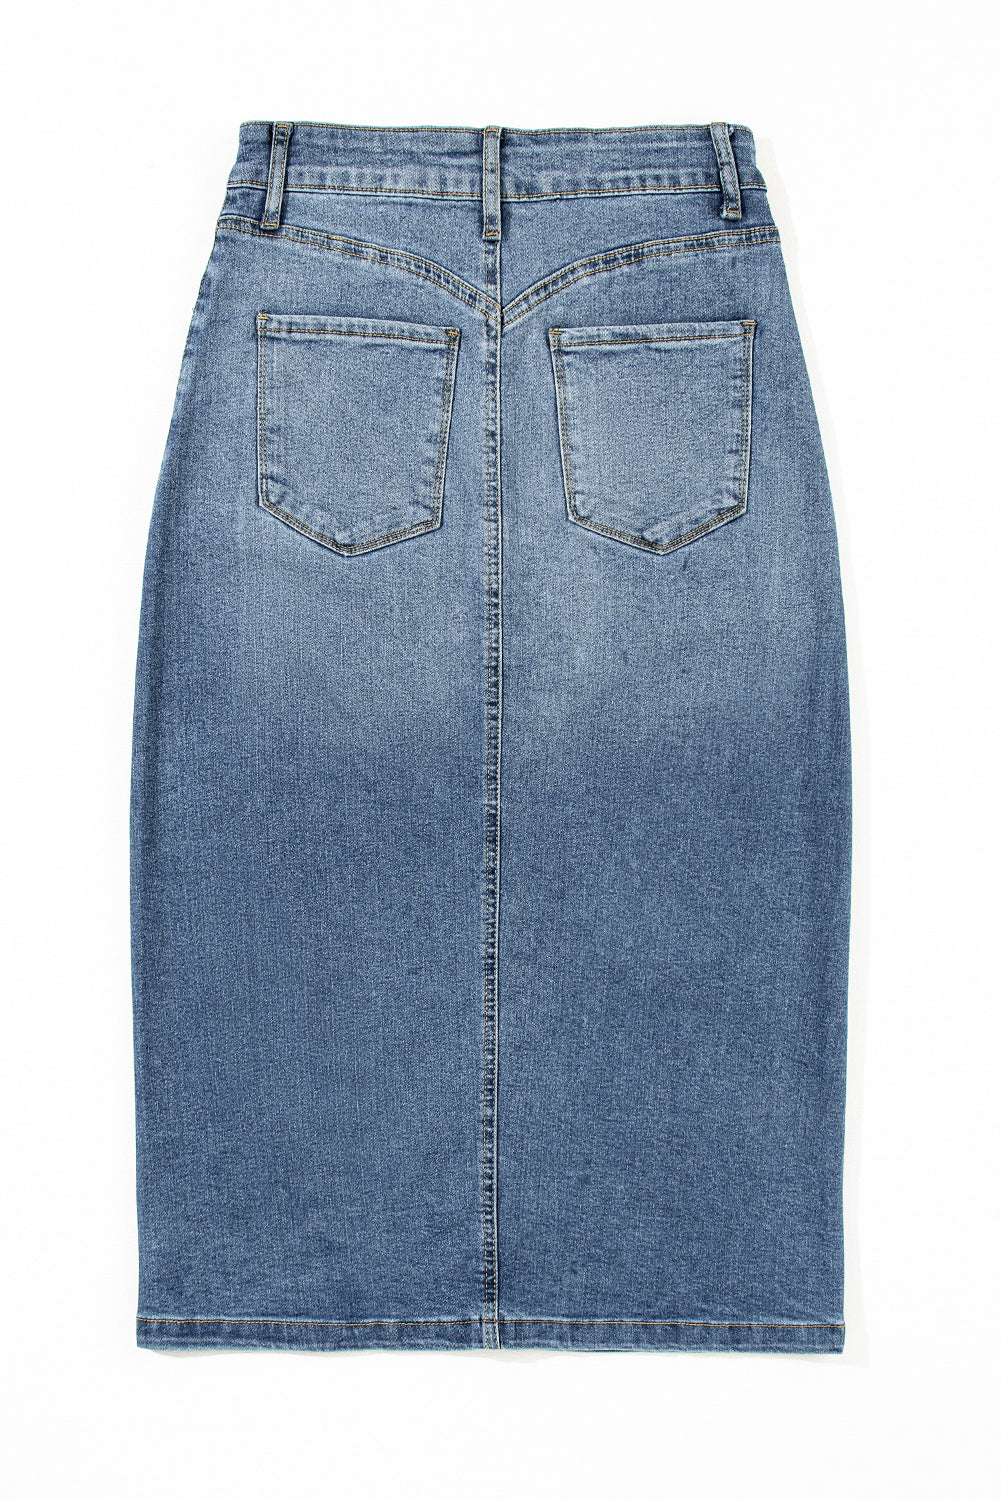 - Sky Blue 4 Patch Pockets Front Slit Denim Skirt - womens skirts at TFC&H Co.